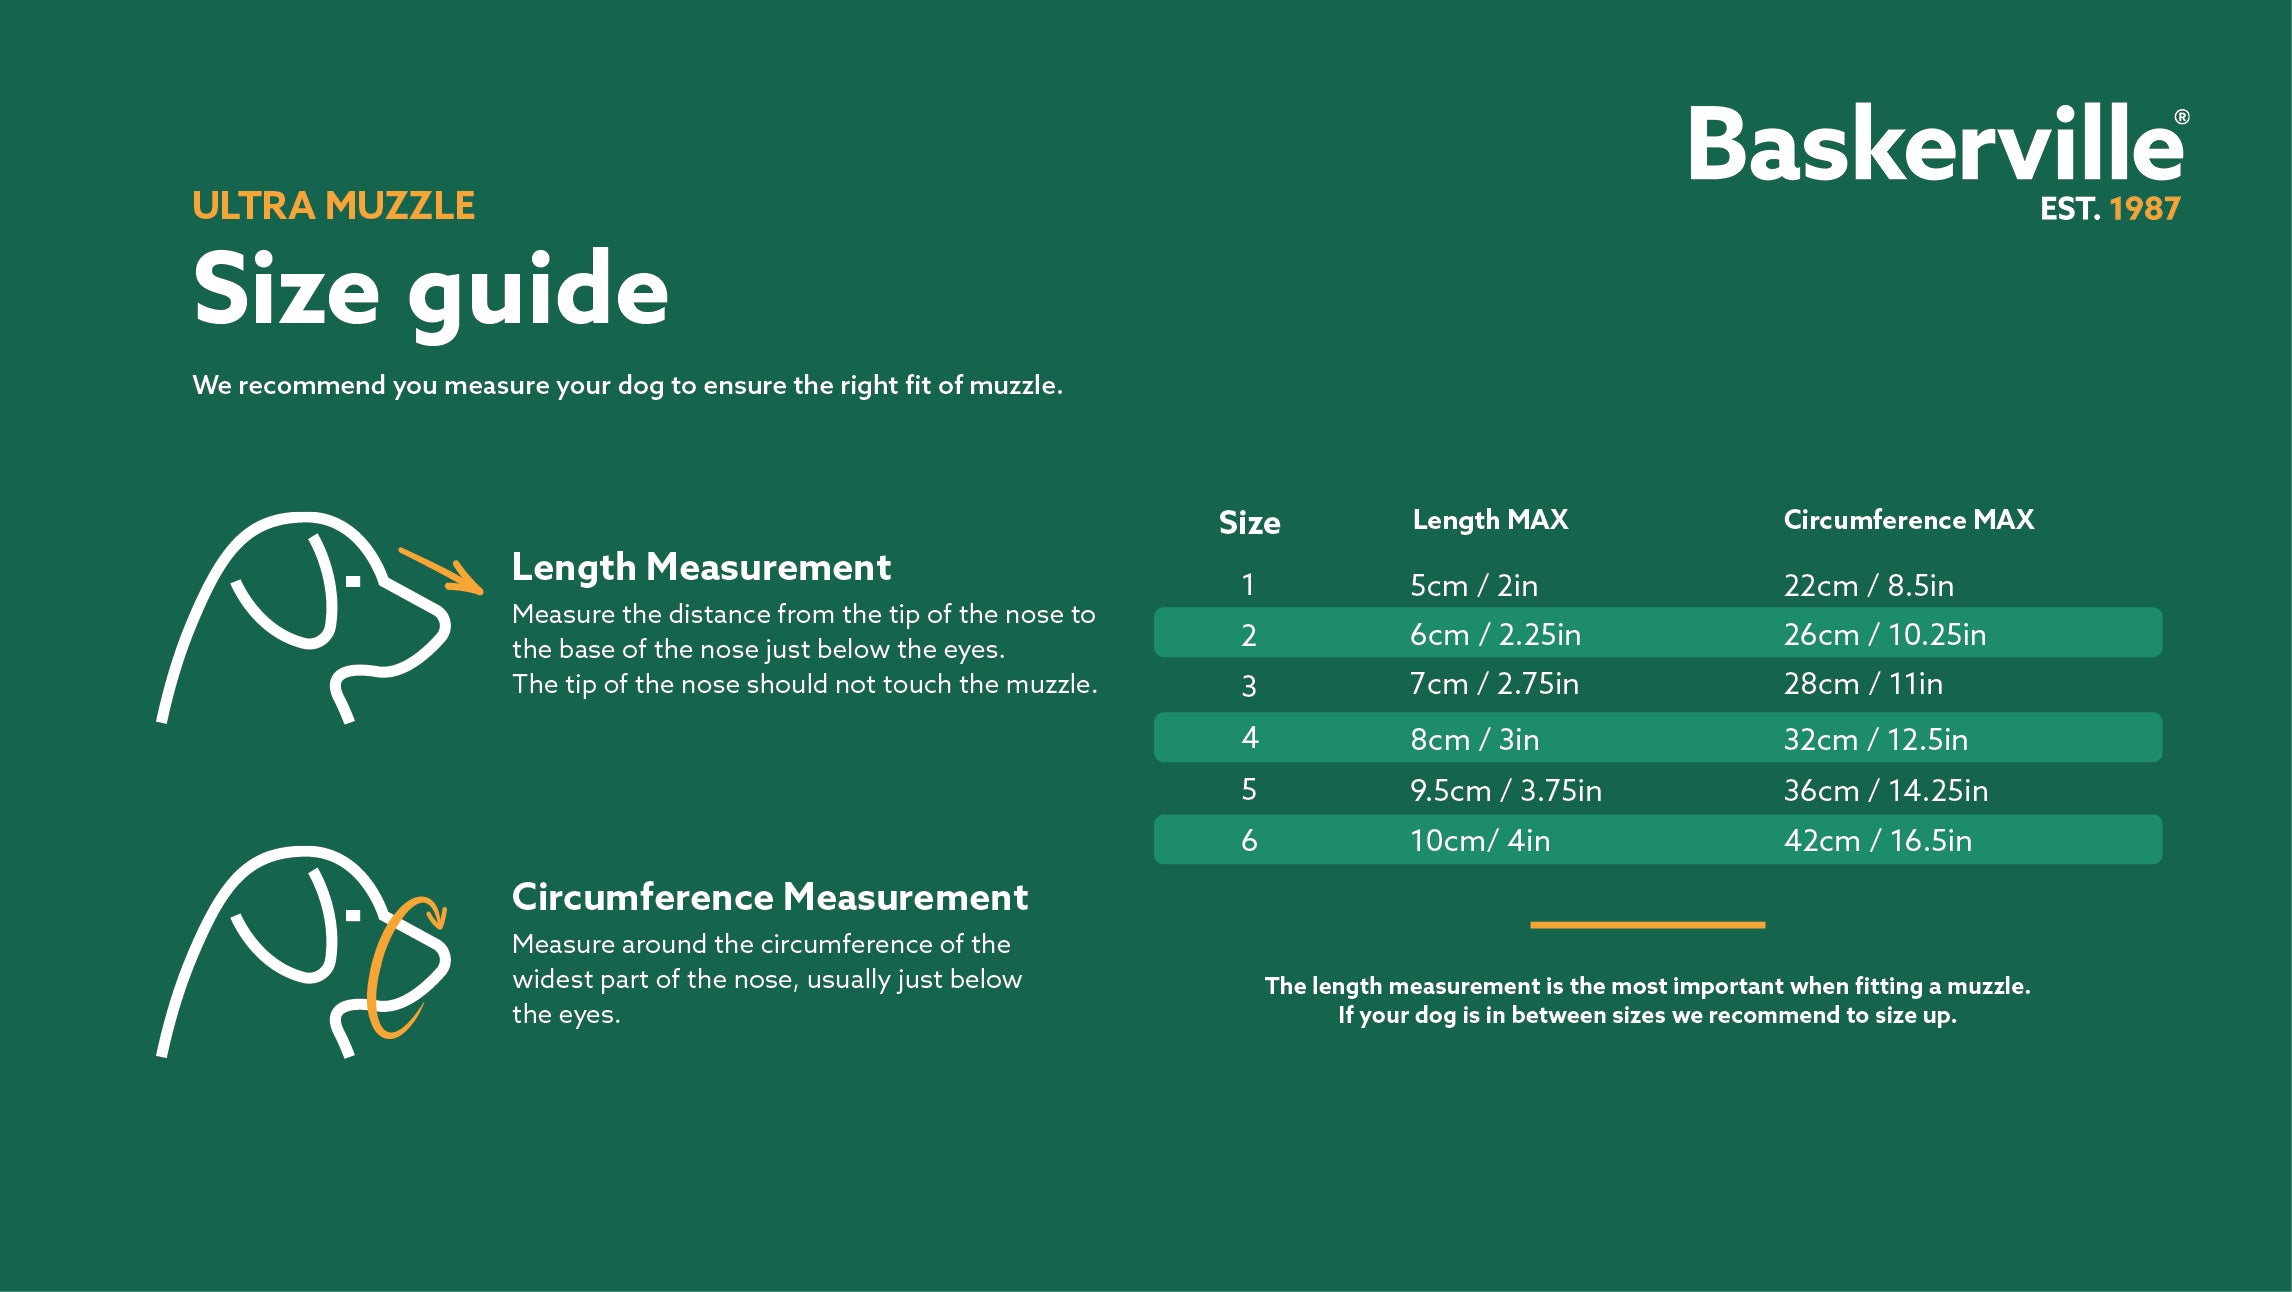 Baskerville Muzzle: Illustration demonstrating the size guide for proper fitting and comfort.